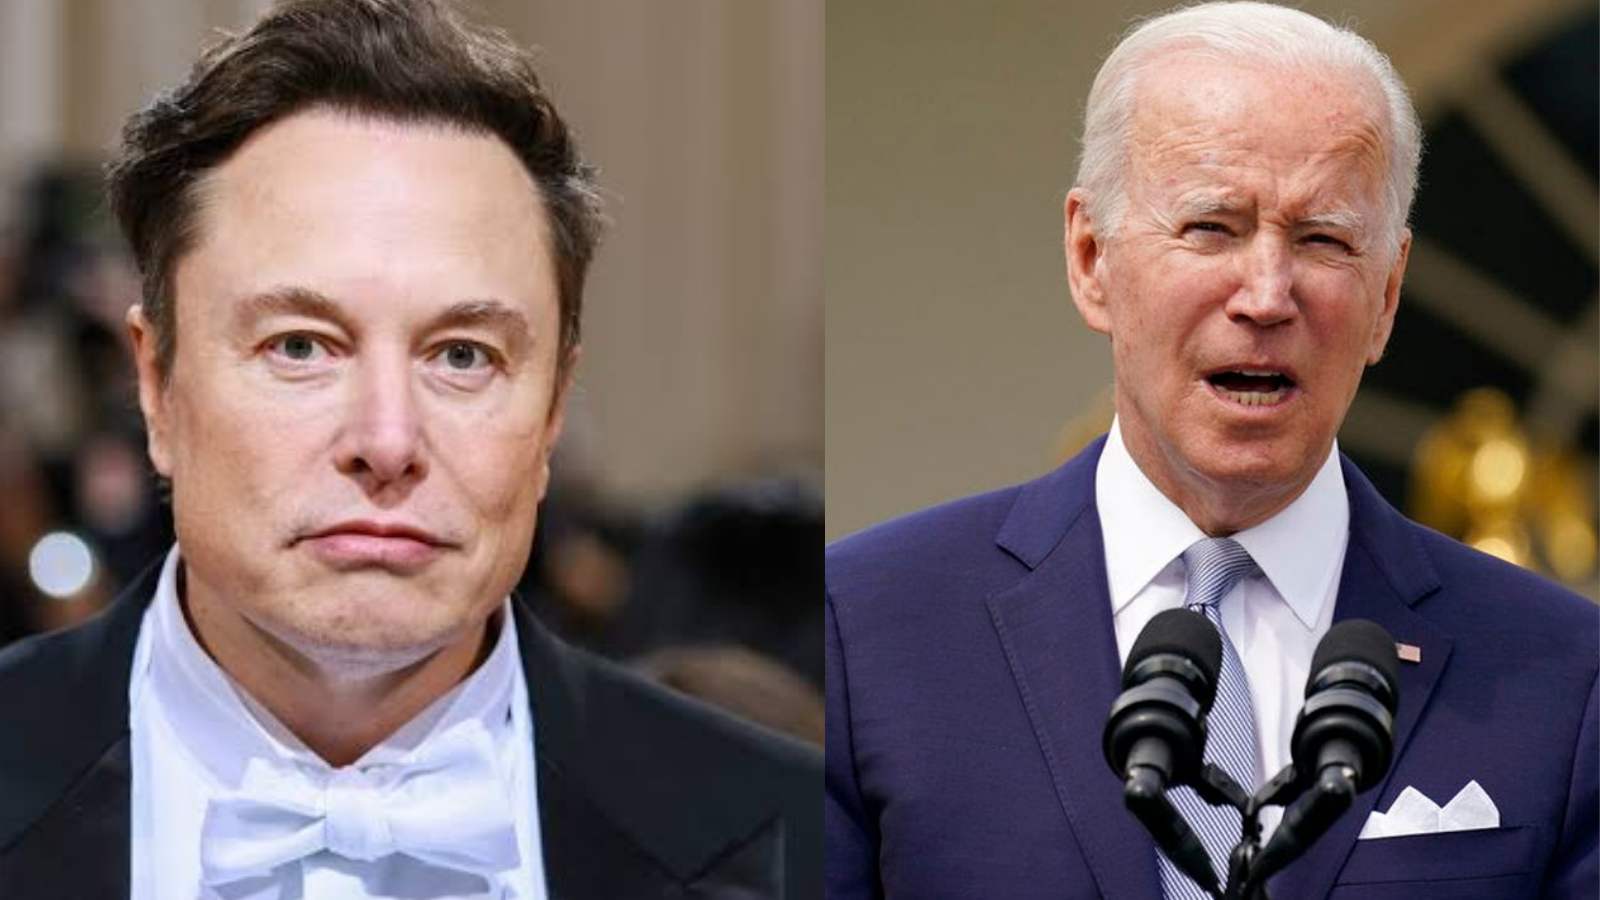 Elon Musk and Joe Biden